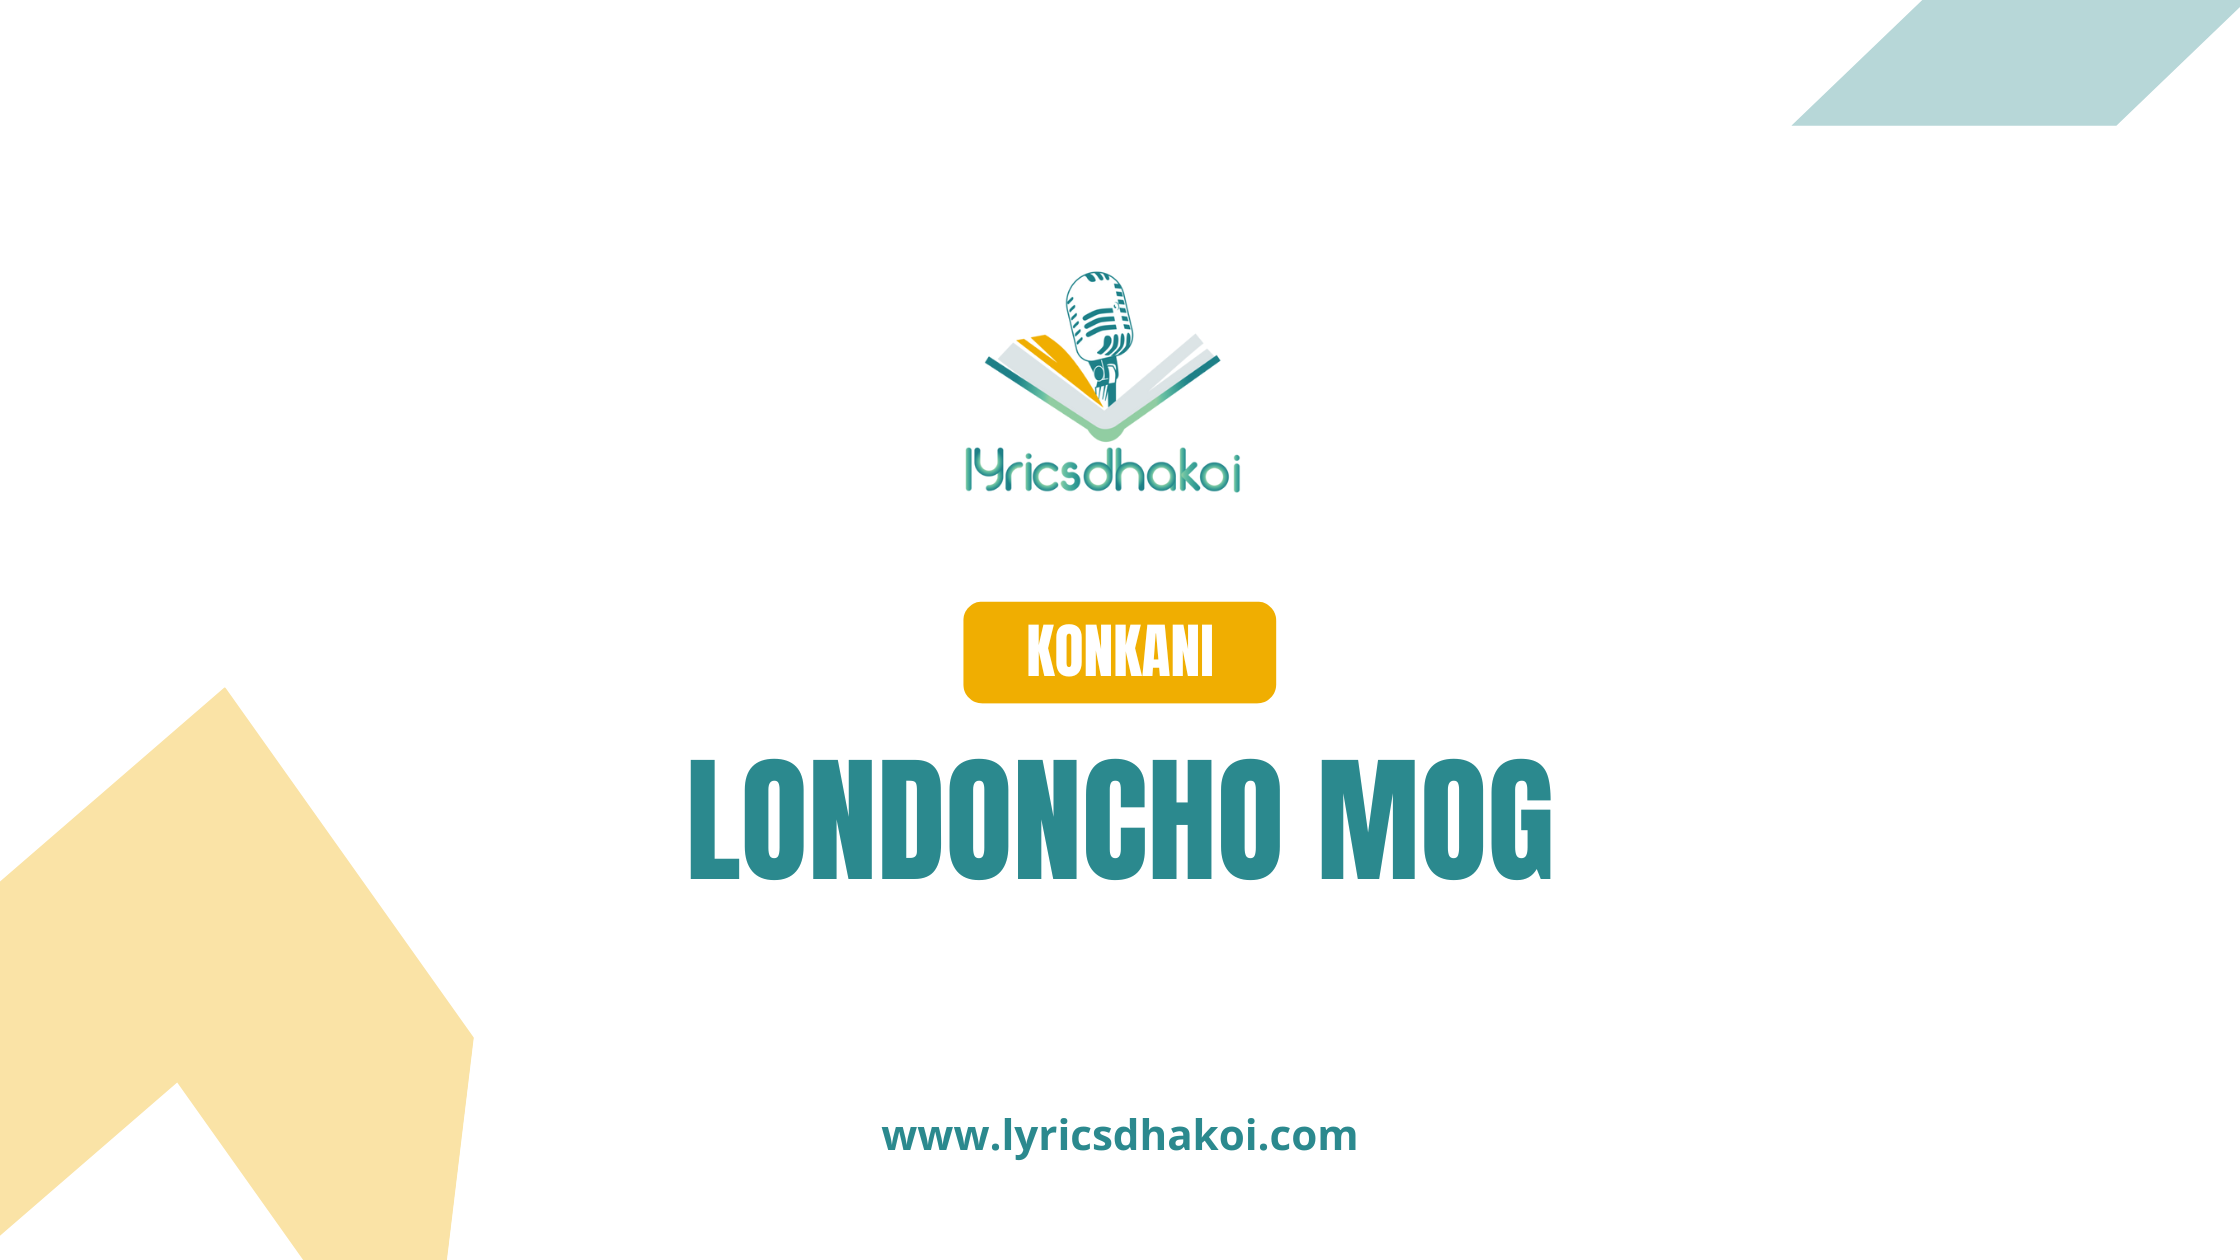 Londoncho Mog Konkani Lyrics for Karaoke Online - LyricsDhakoi.com